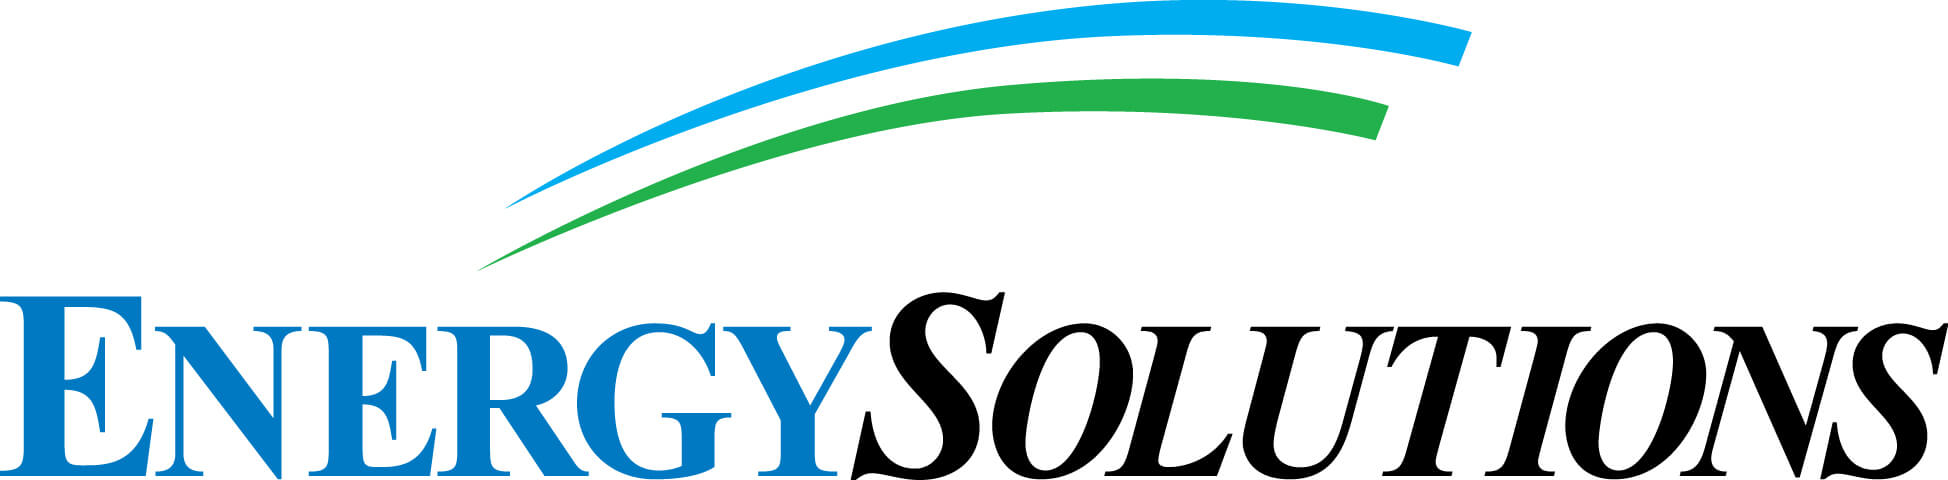 Energy-Solutions-Logo